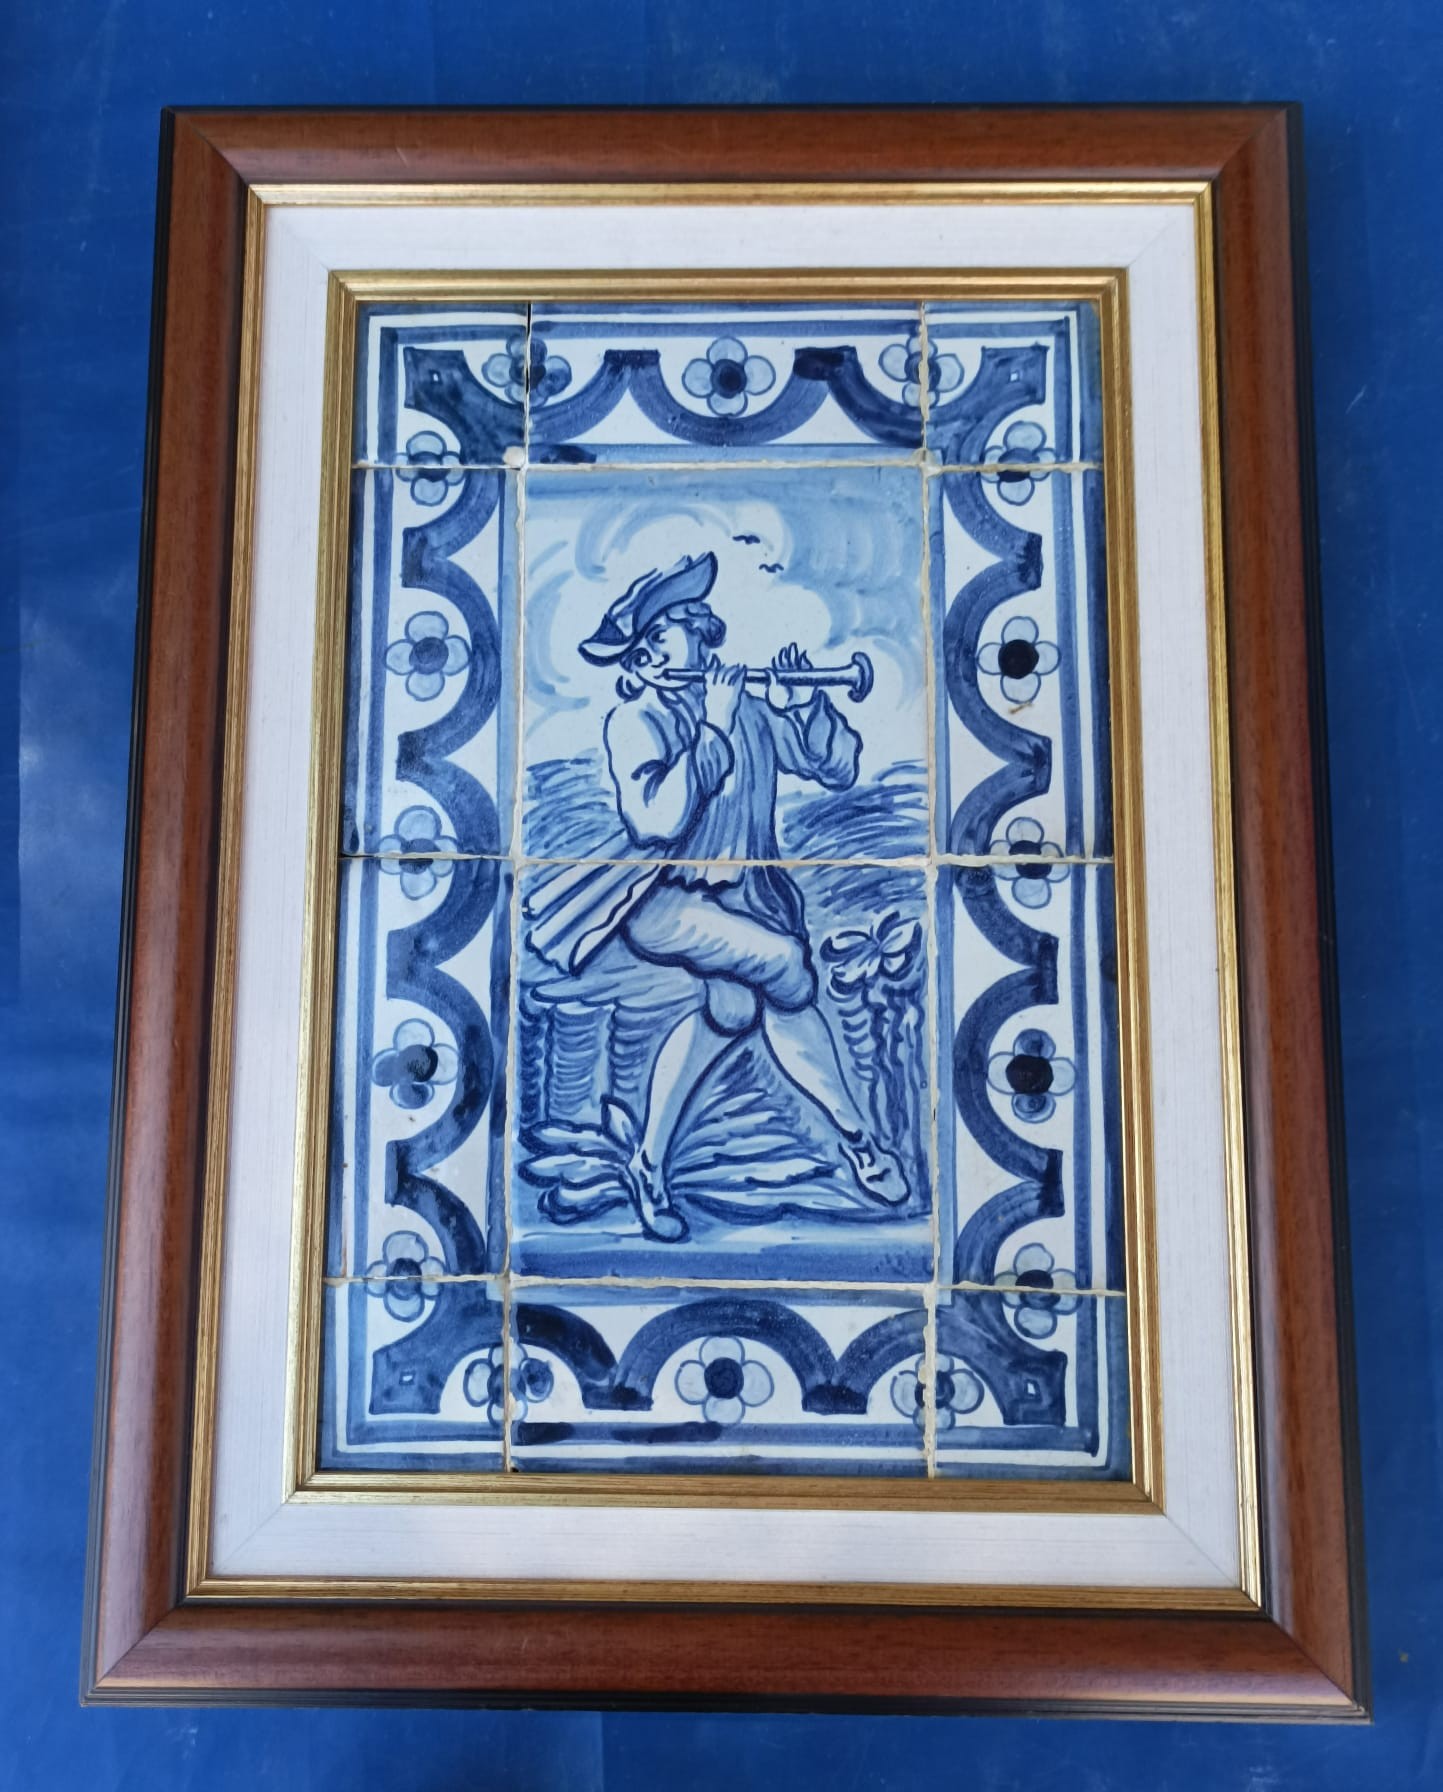 Flautista, painel de doze (12) azulejos em tons de azul.